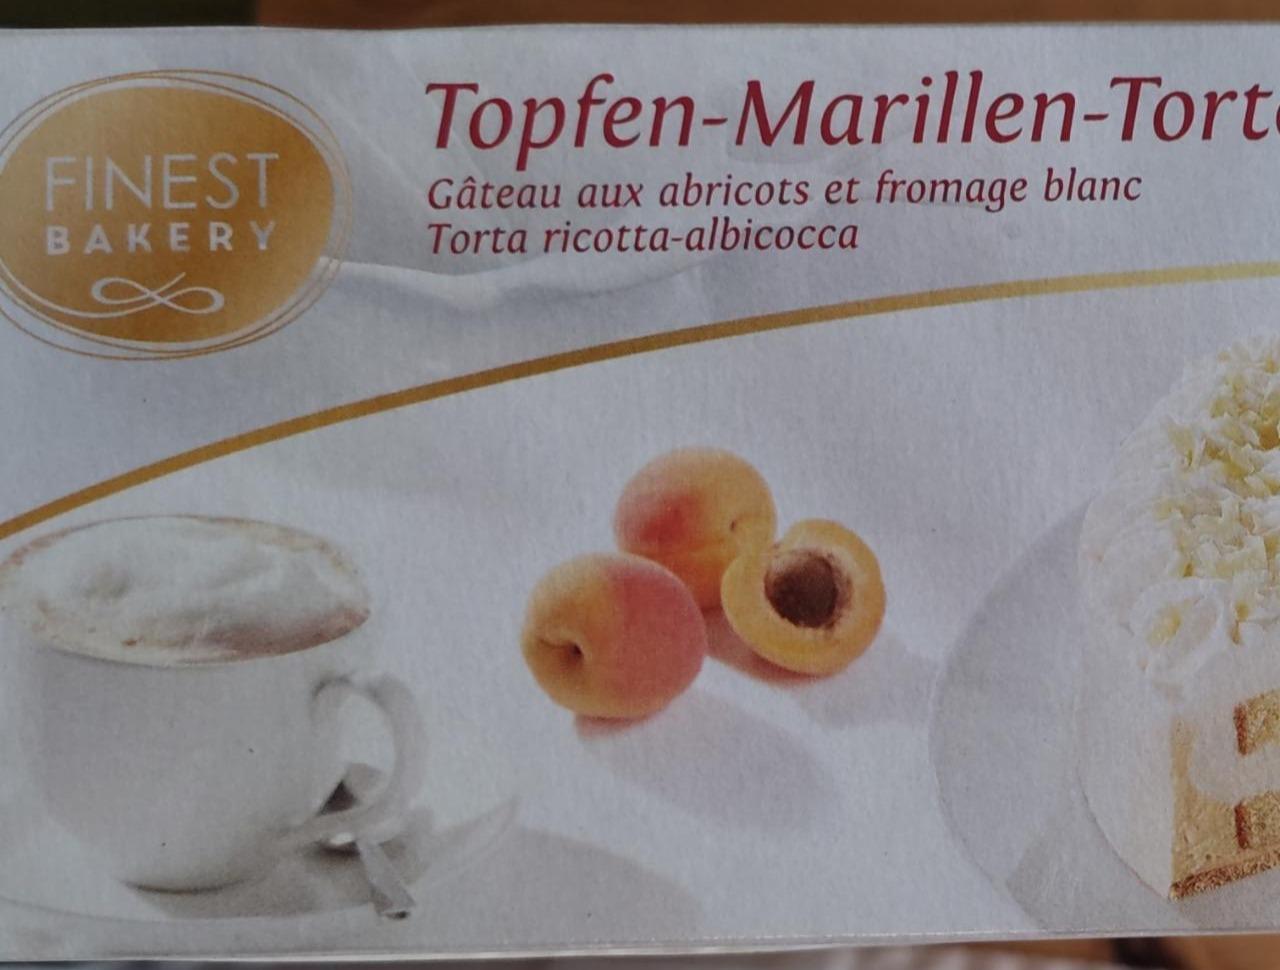 Fotografie - Topfen-Marillen-Torte Finest Bakery